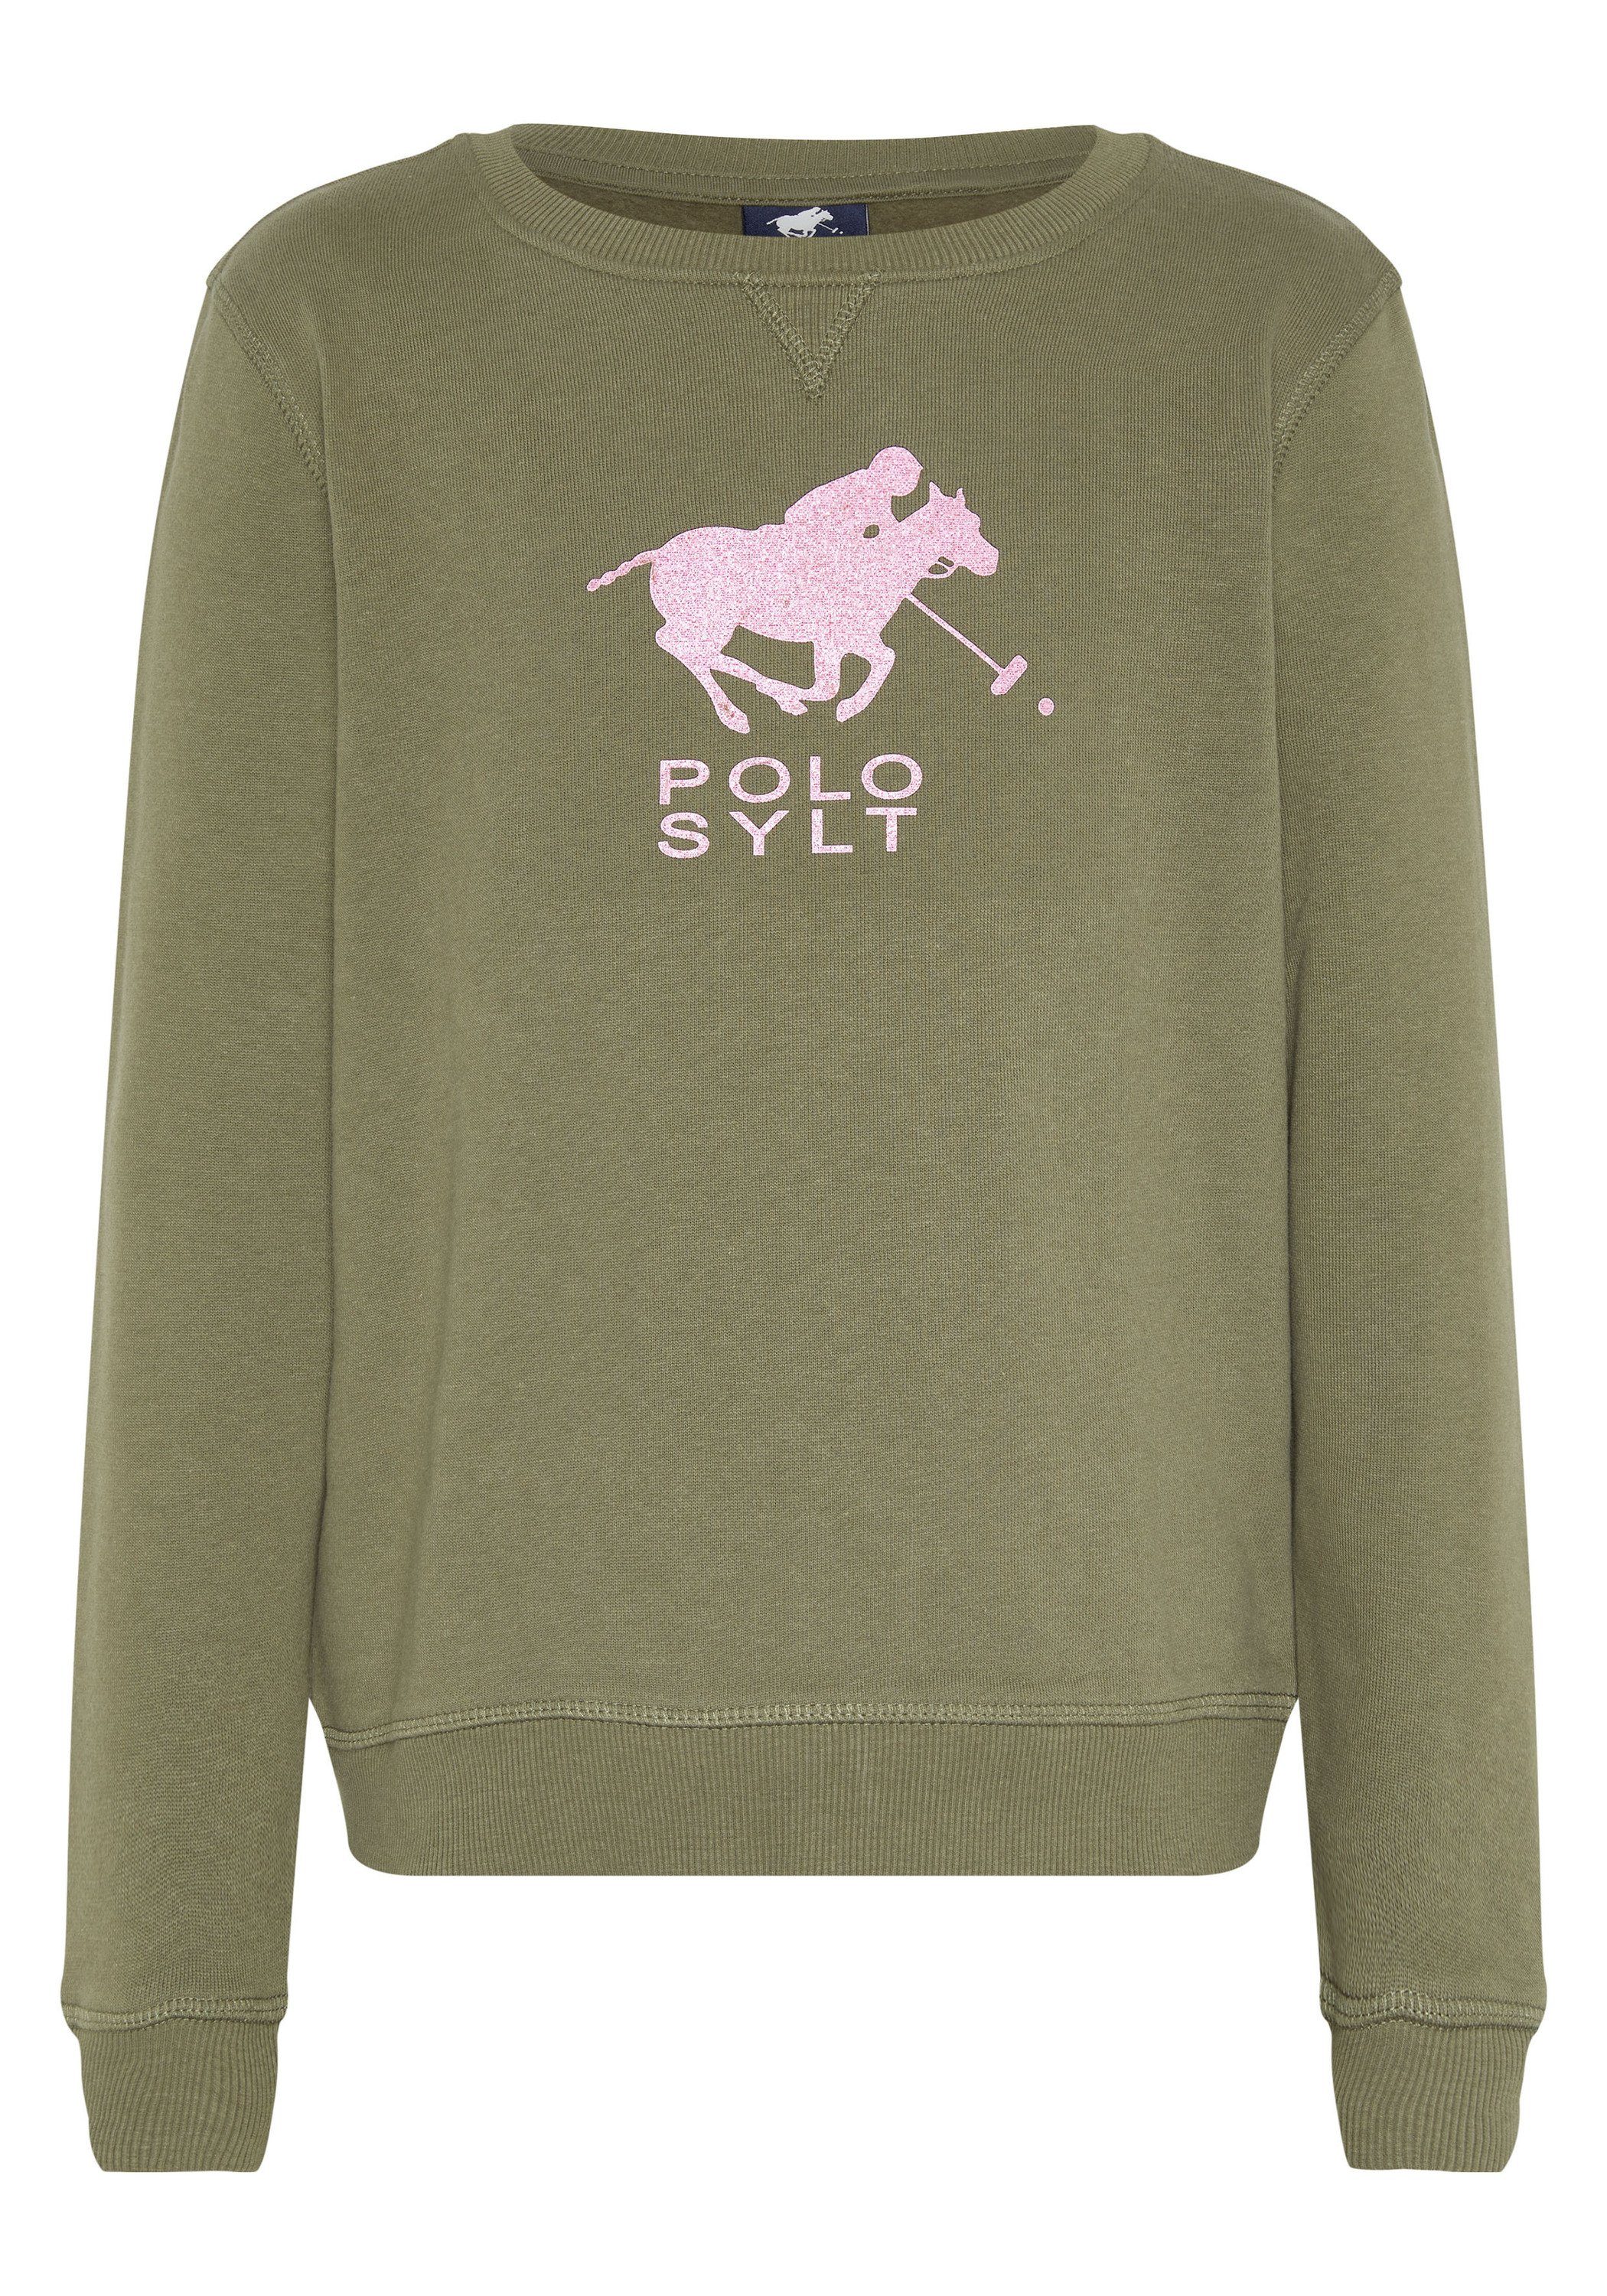 Polo Sylt Sweatshirt mit Glitzer-Label-Print 18-0521 Burnt Olive